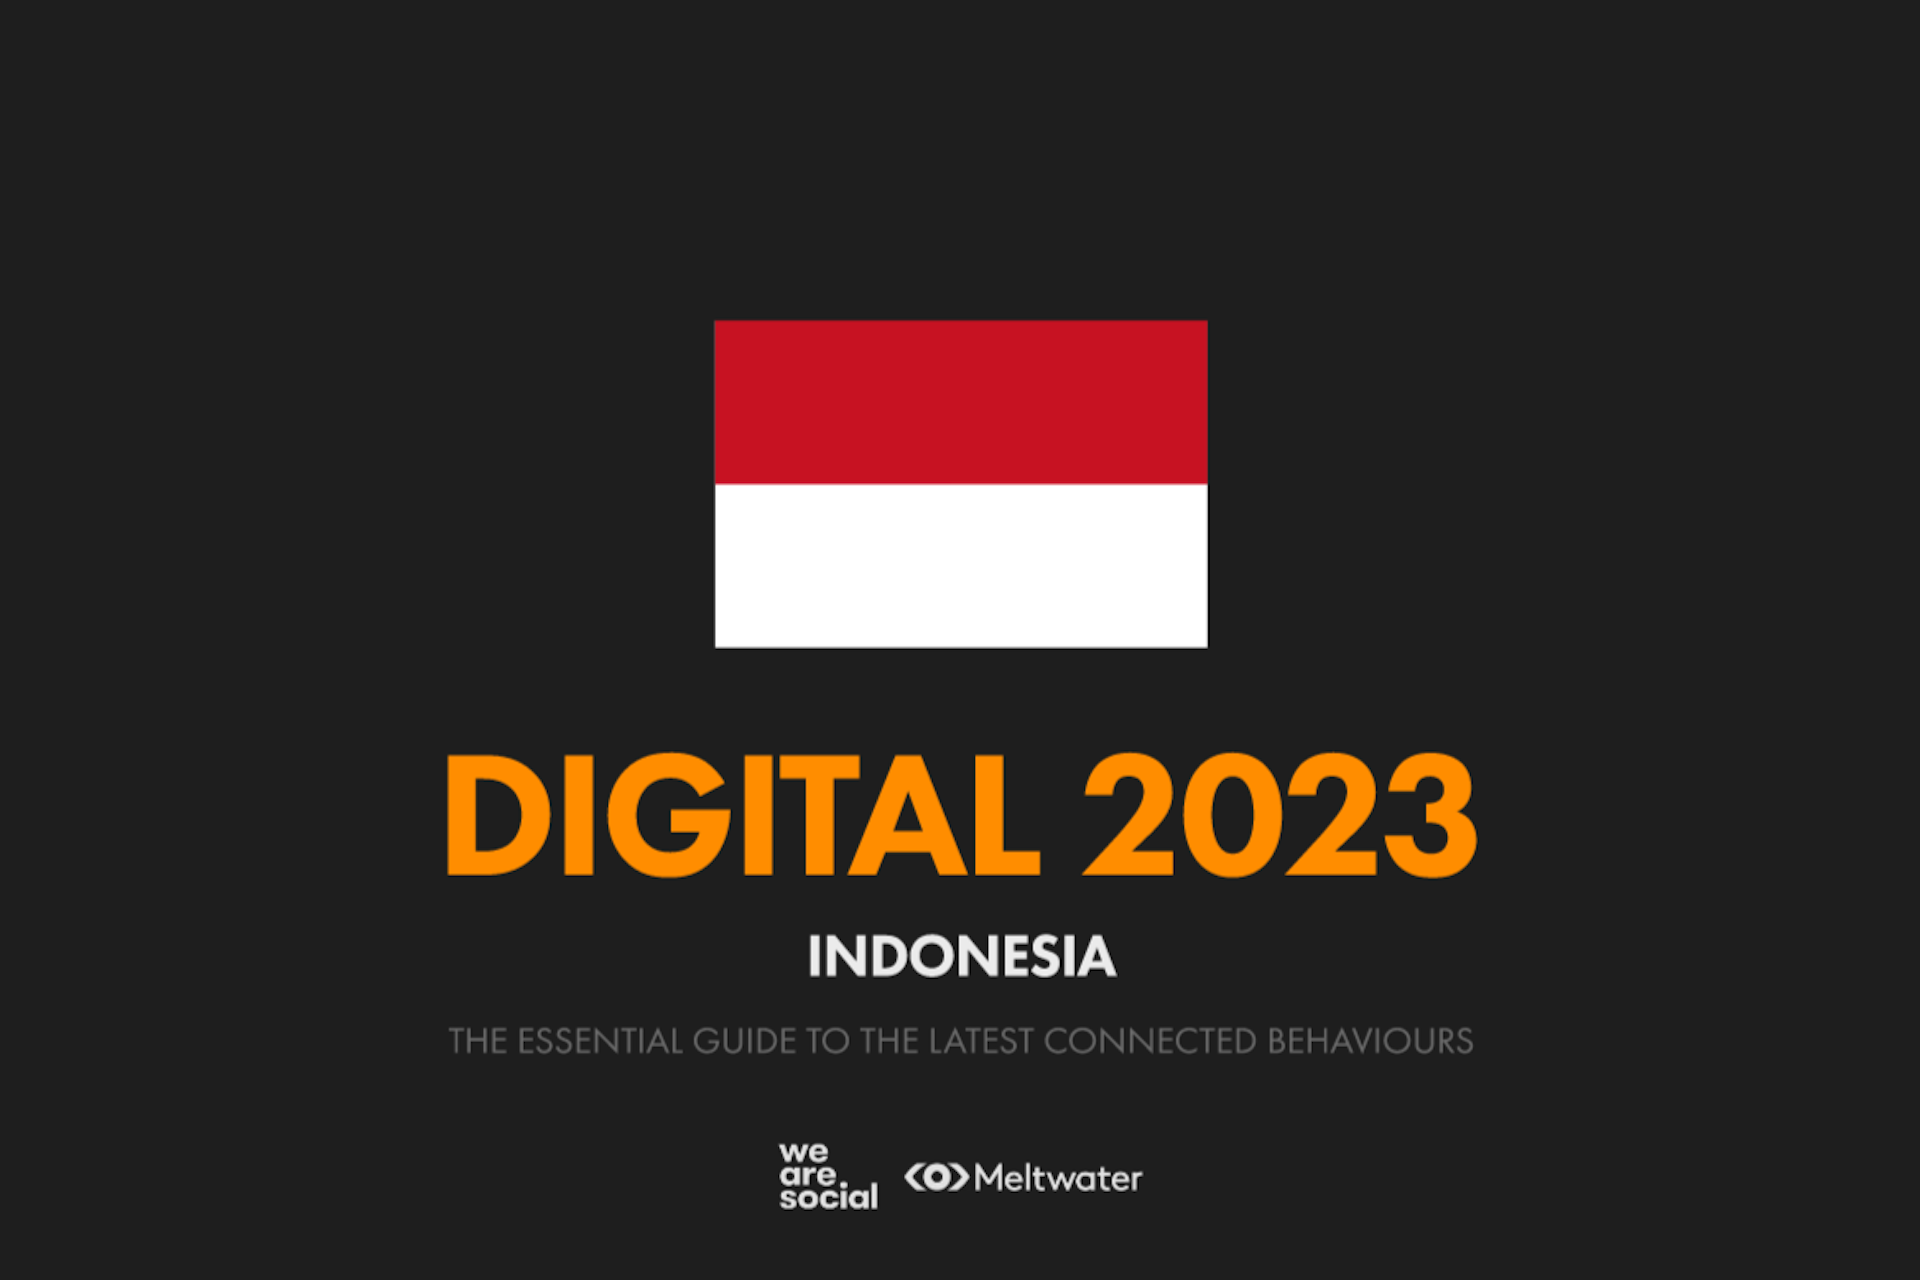 Global Digital Report 2023 for Indonesia